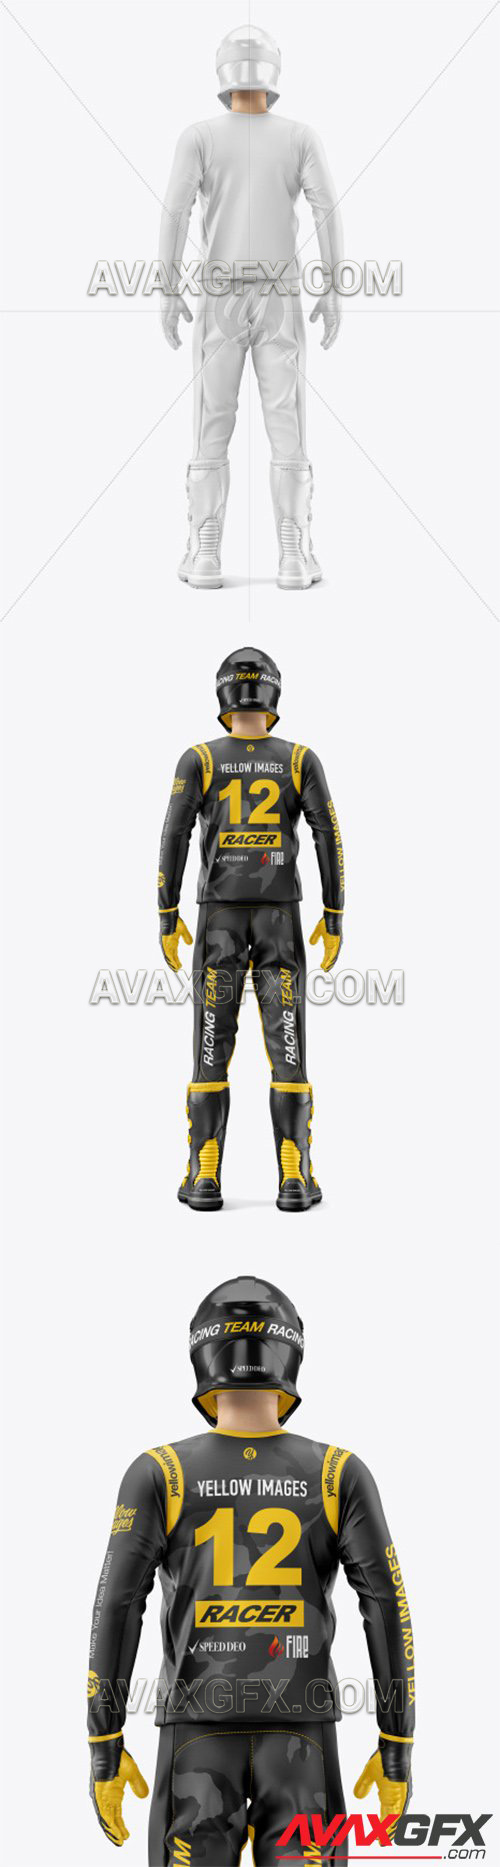 Motocross Racing Kit Mockup 56972